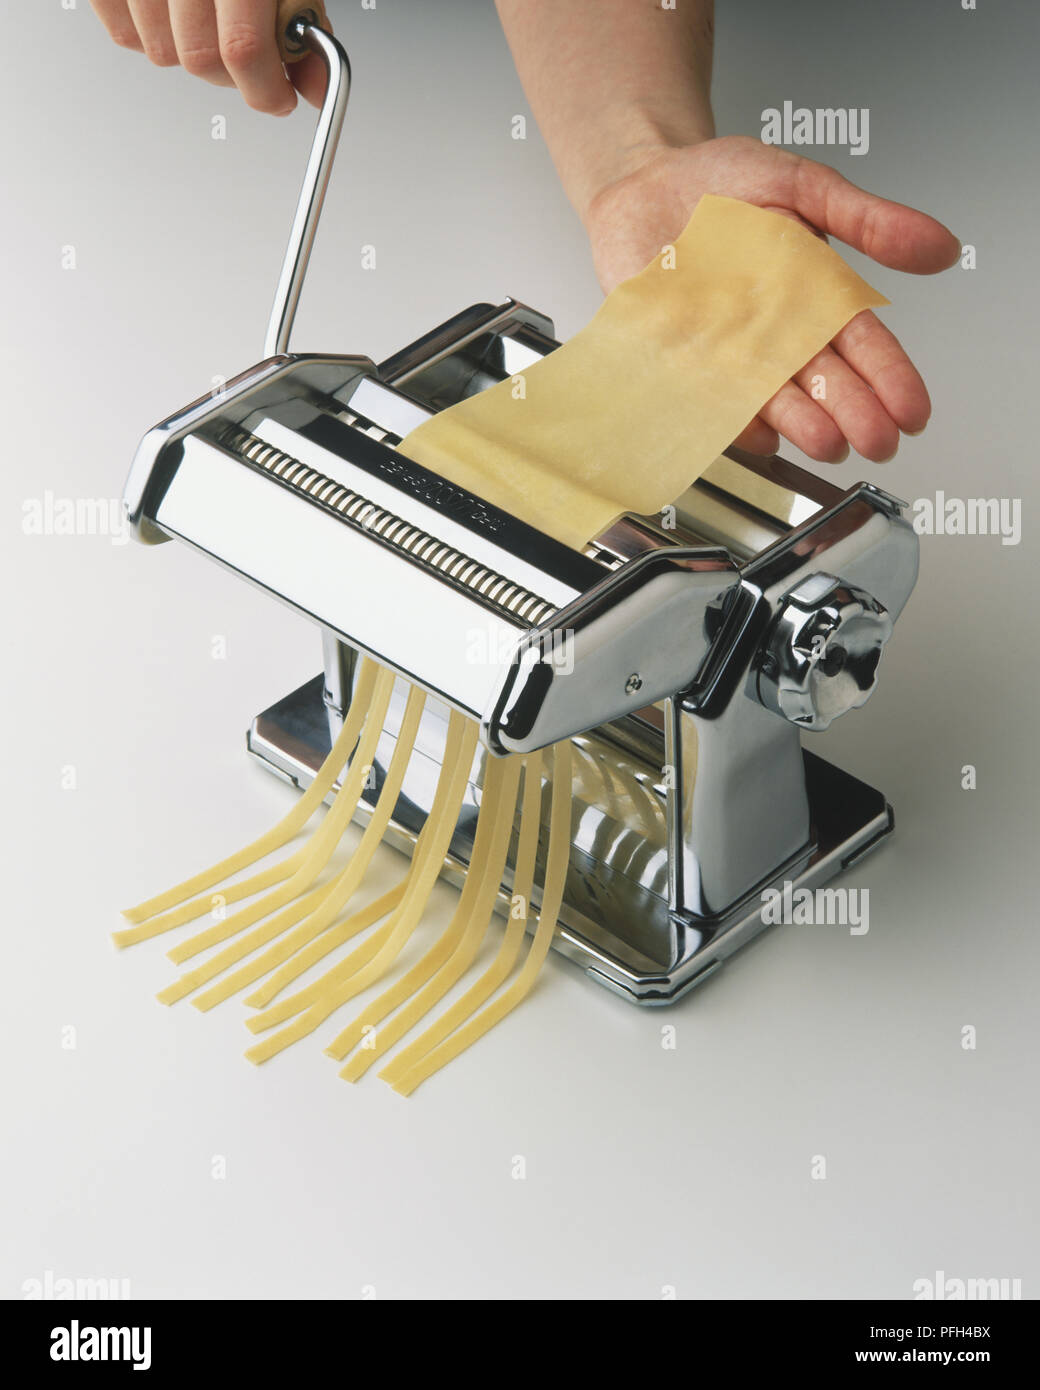 rolling pasta cutter